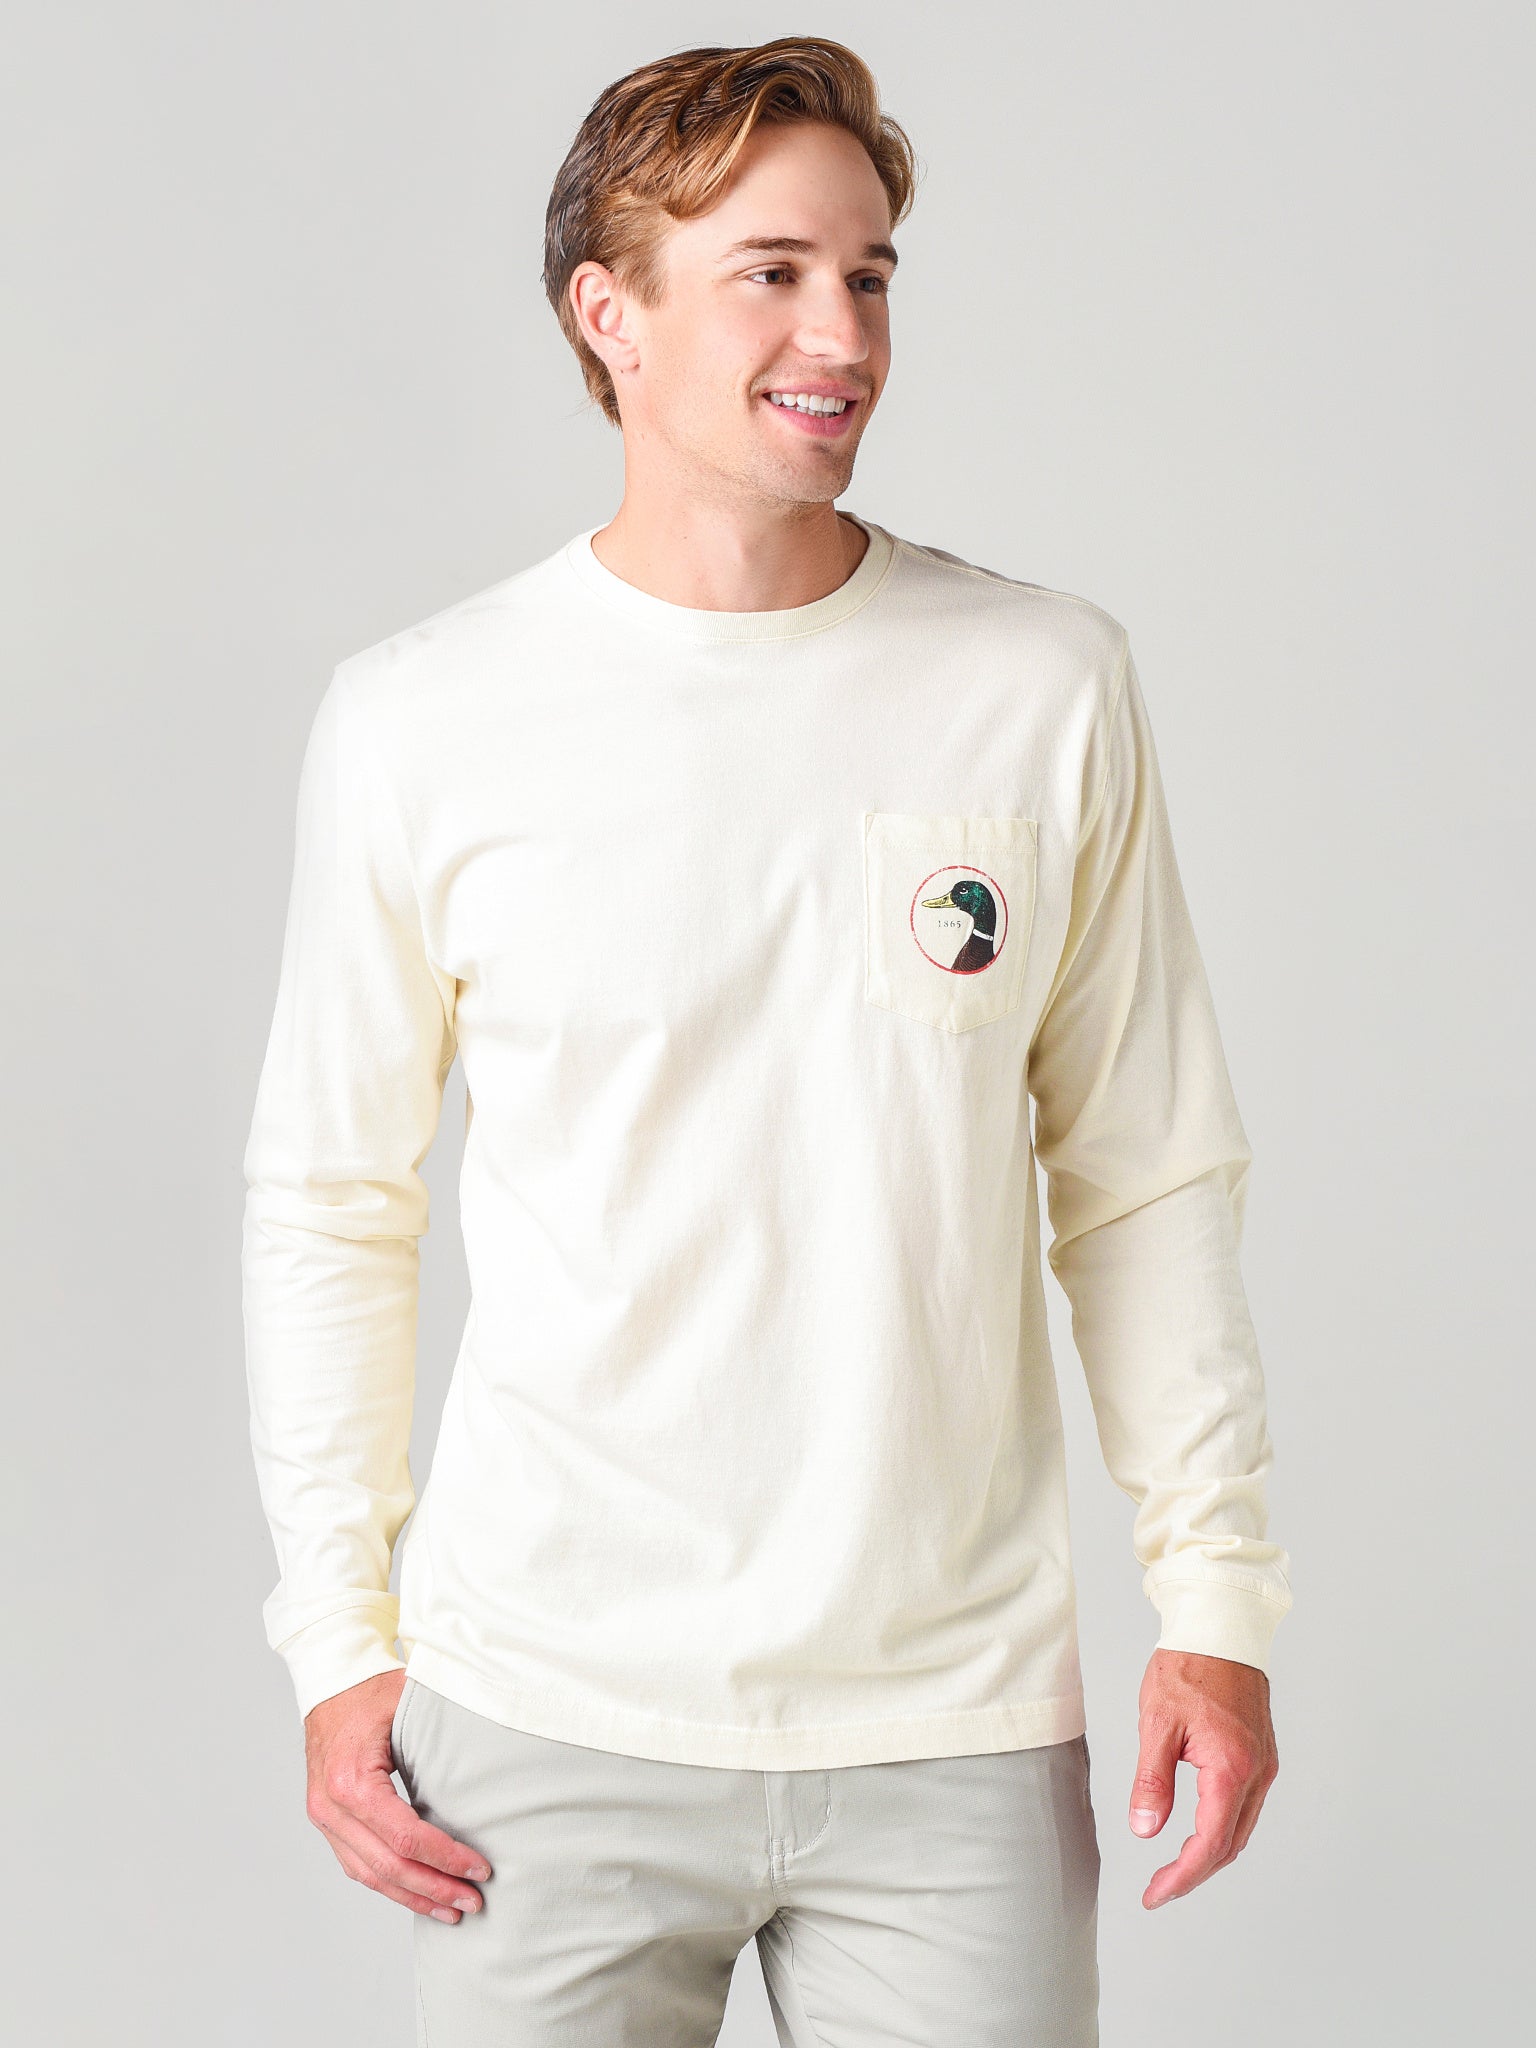 Duck Head Logo Long Sleeve T-Shirt - White